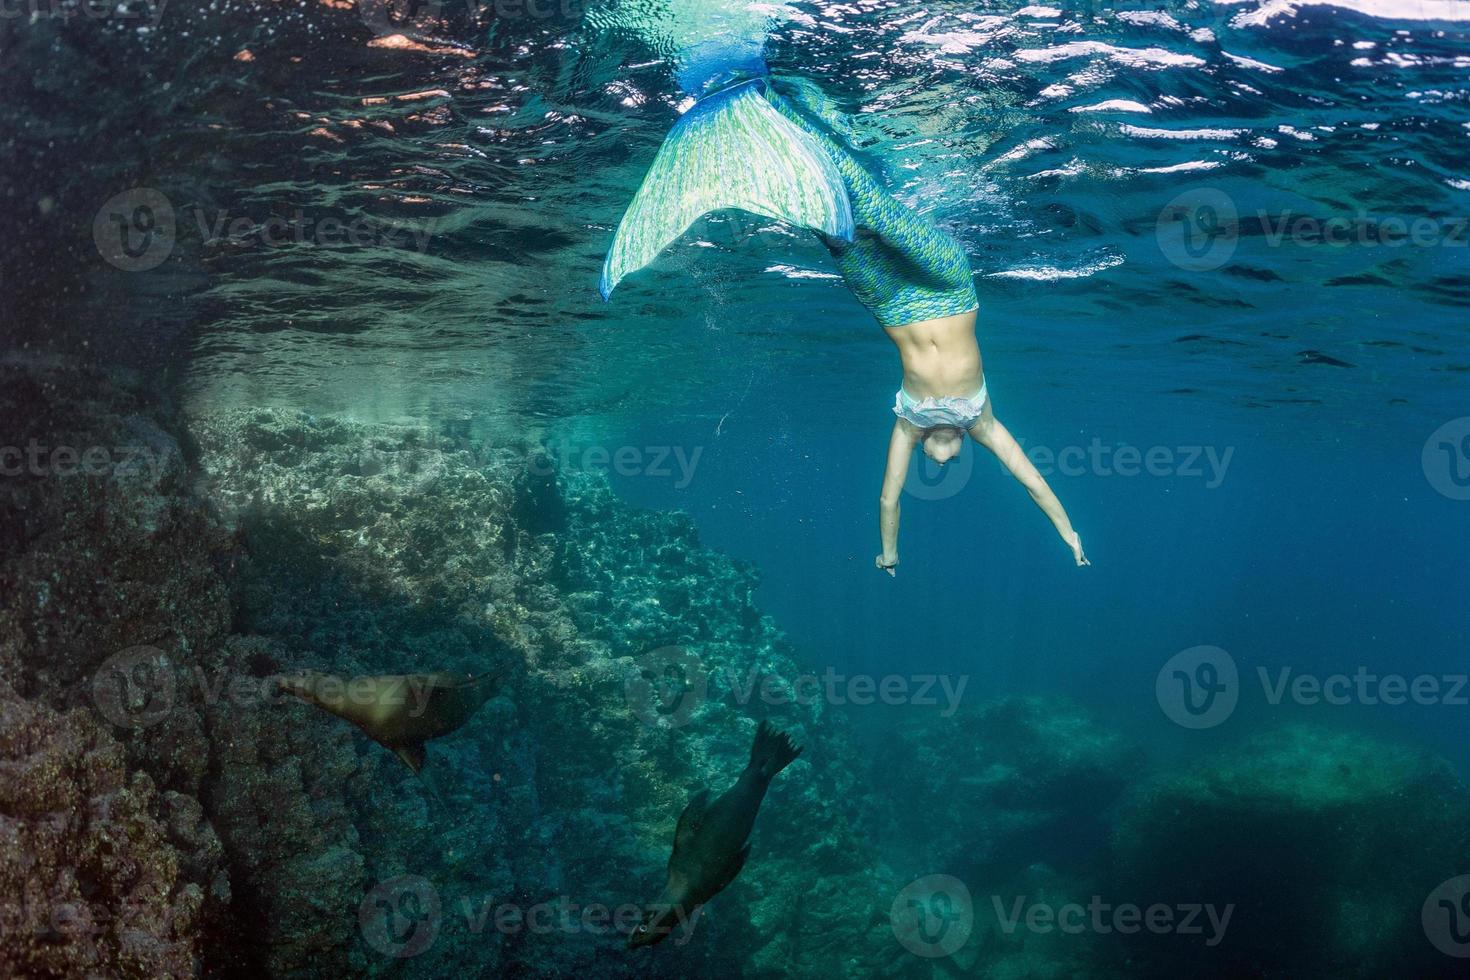 loira linda sereia mergulhador debaixo d'água foto